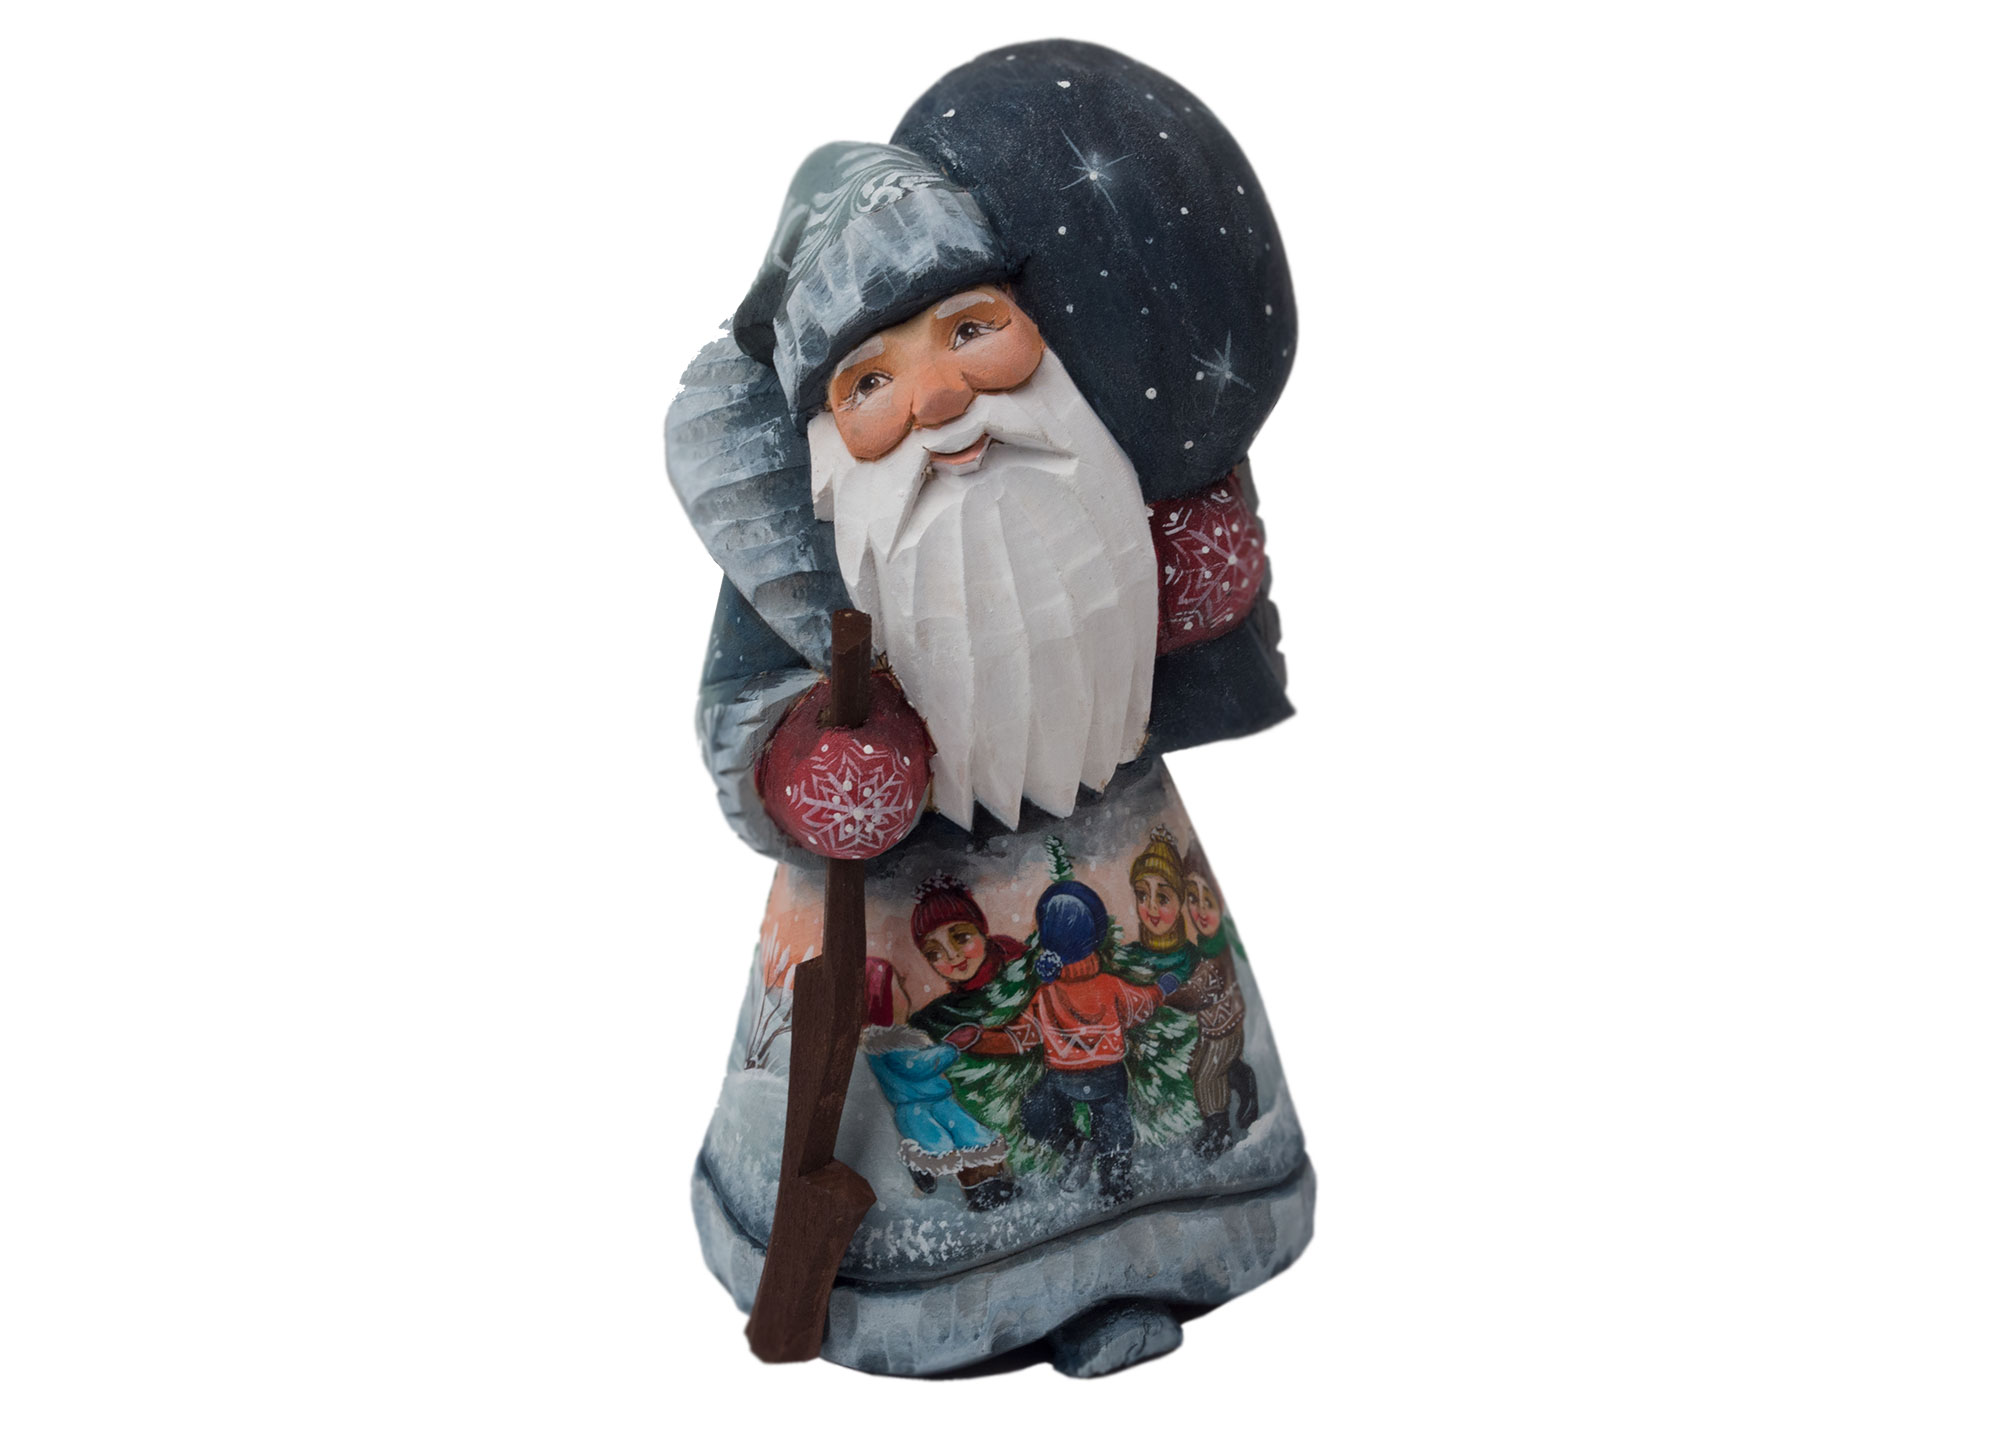 Buy Santa with Starry Sack by Besedovskaya 5" at GoldenCockerel.com